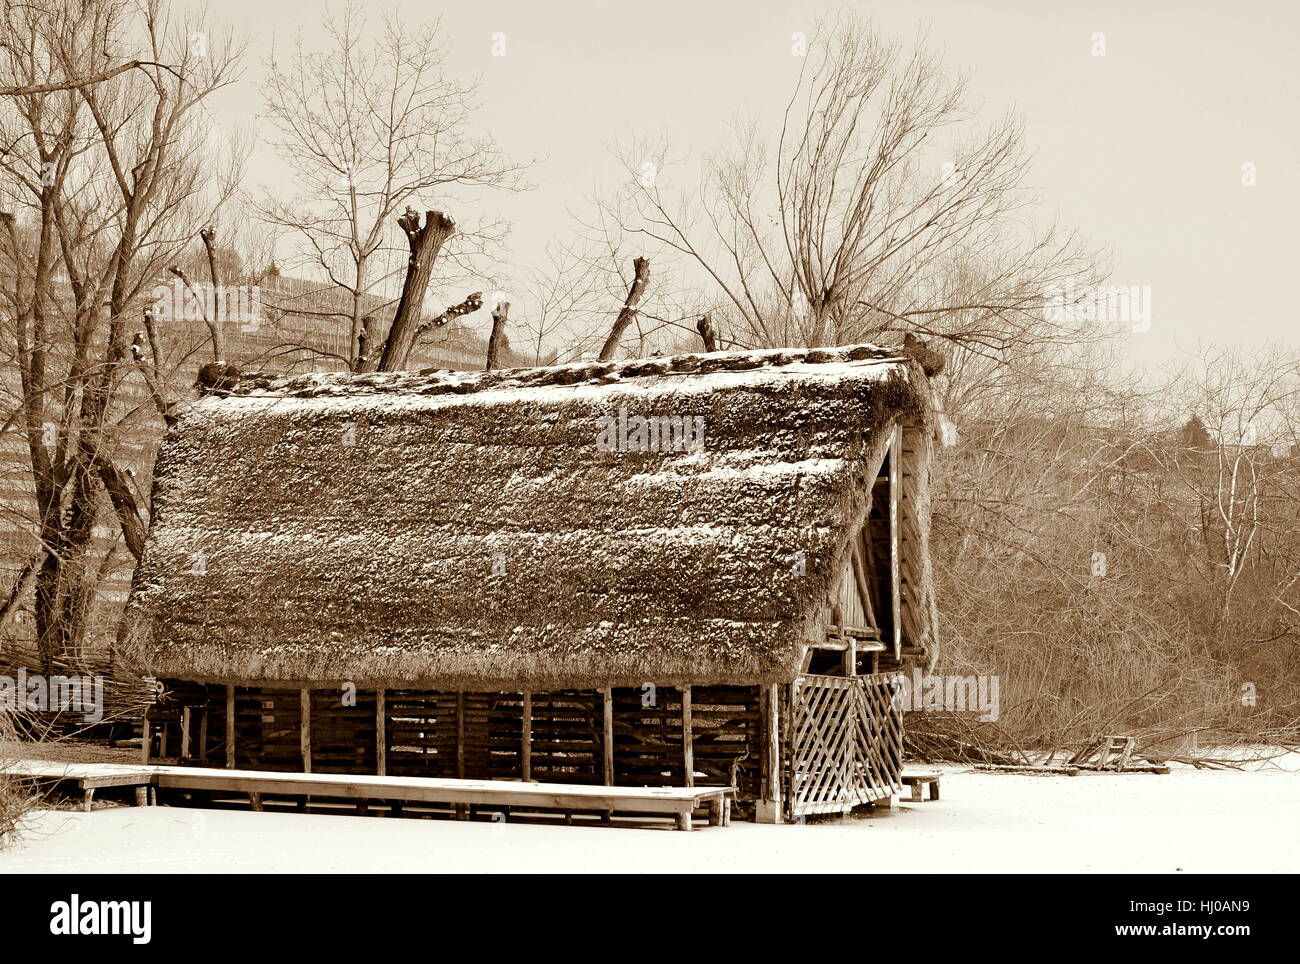 boathouse in winter on frozen lake Stock Photo